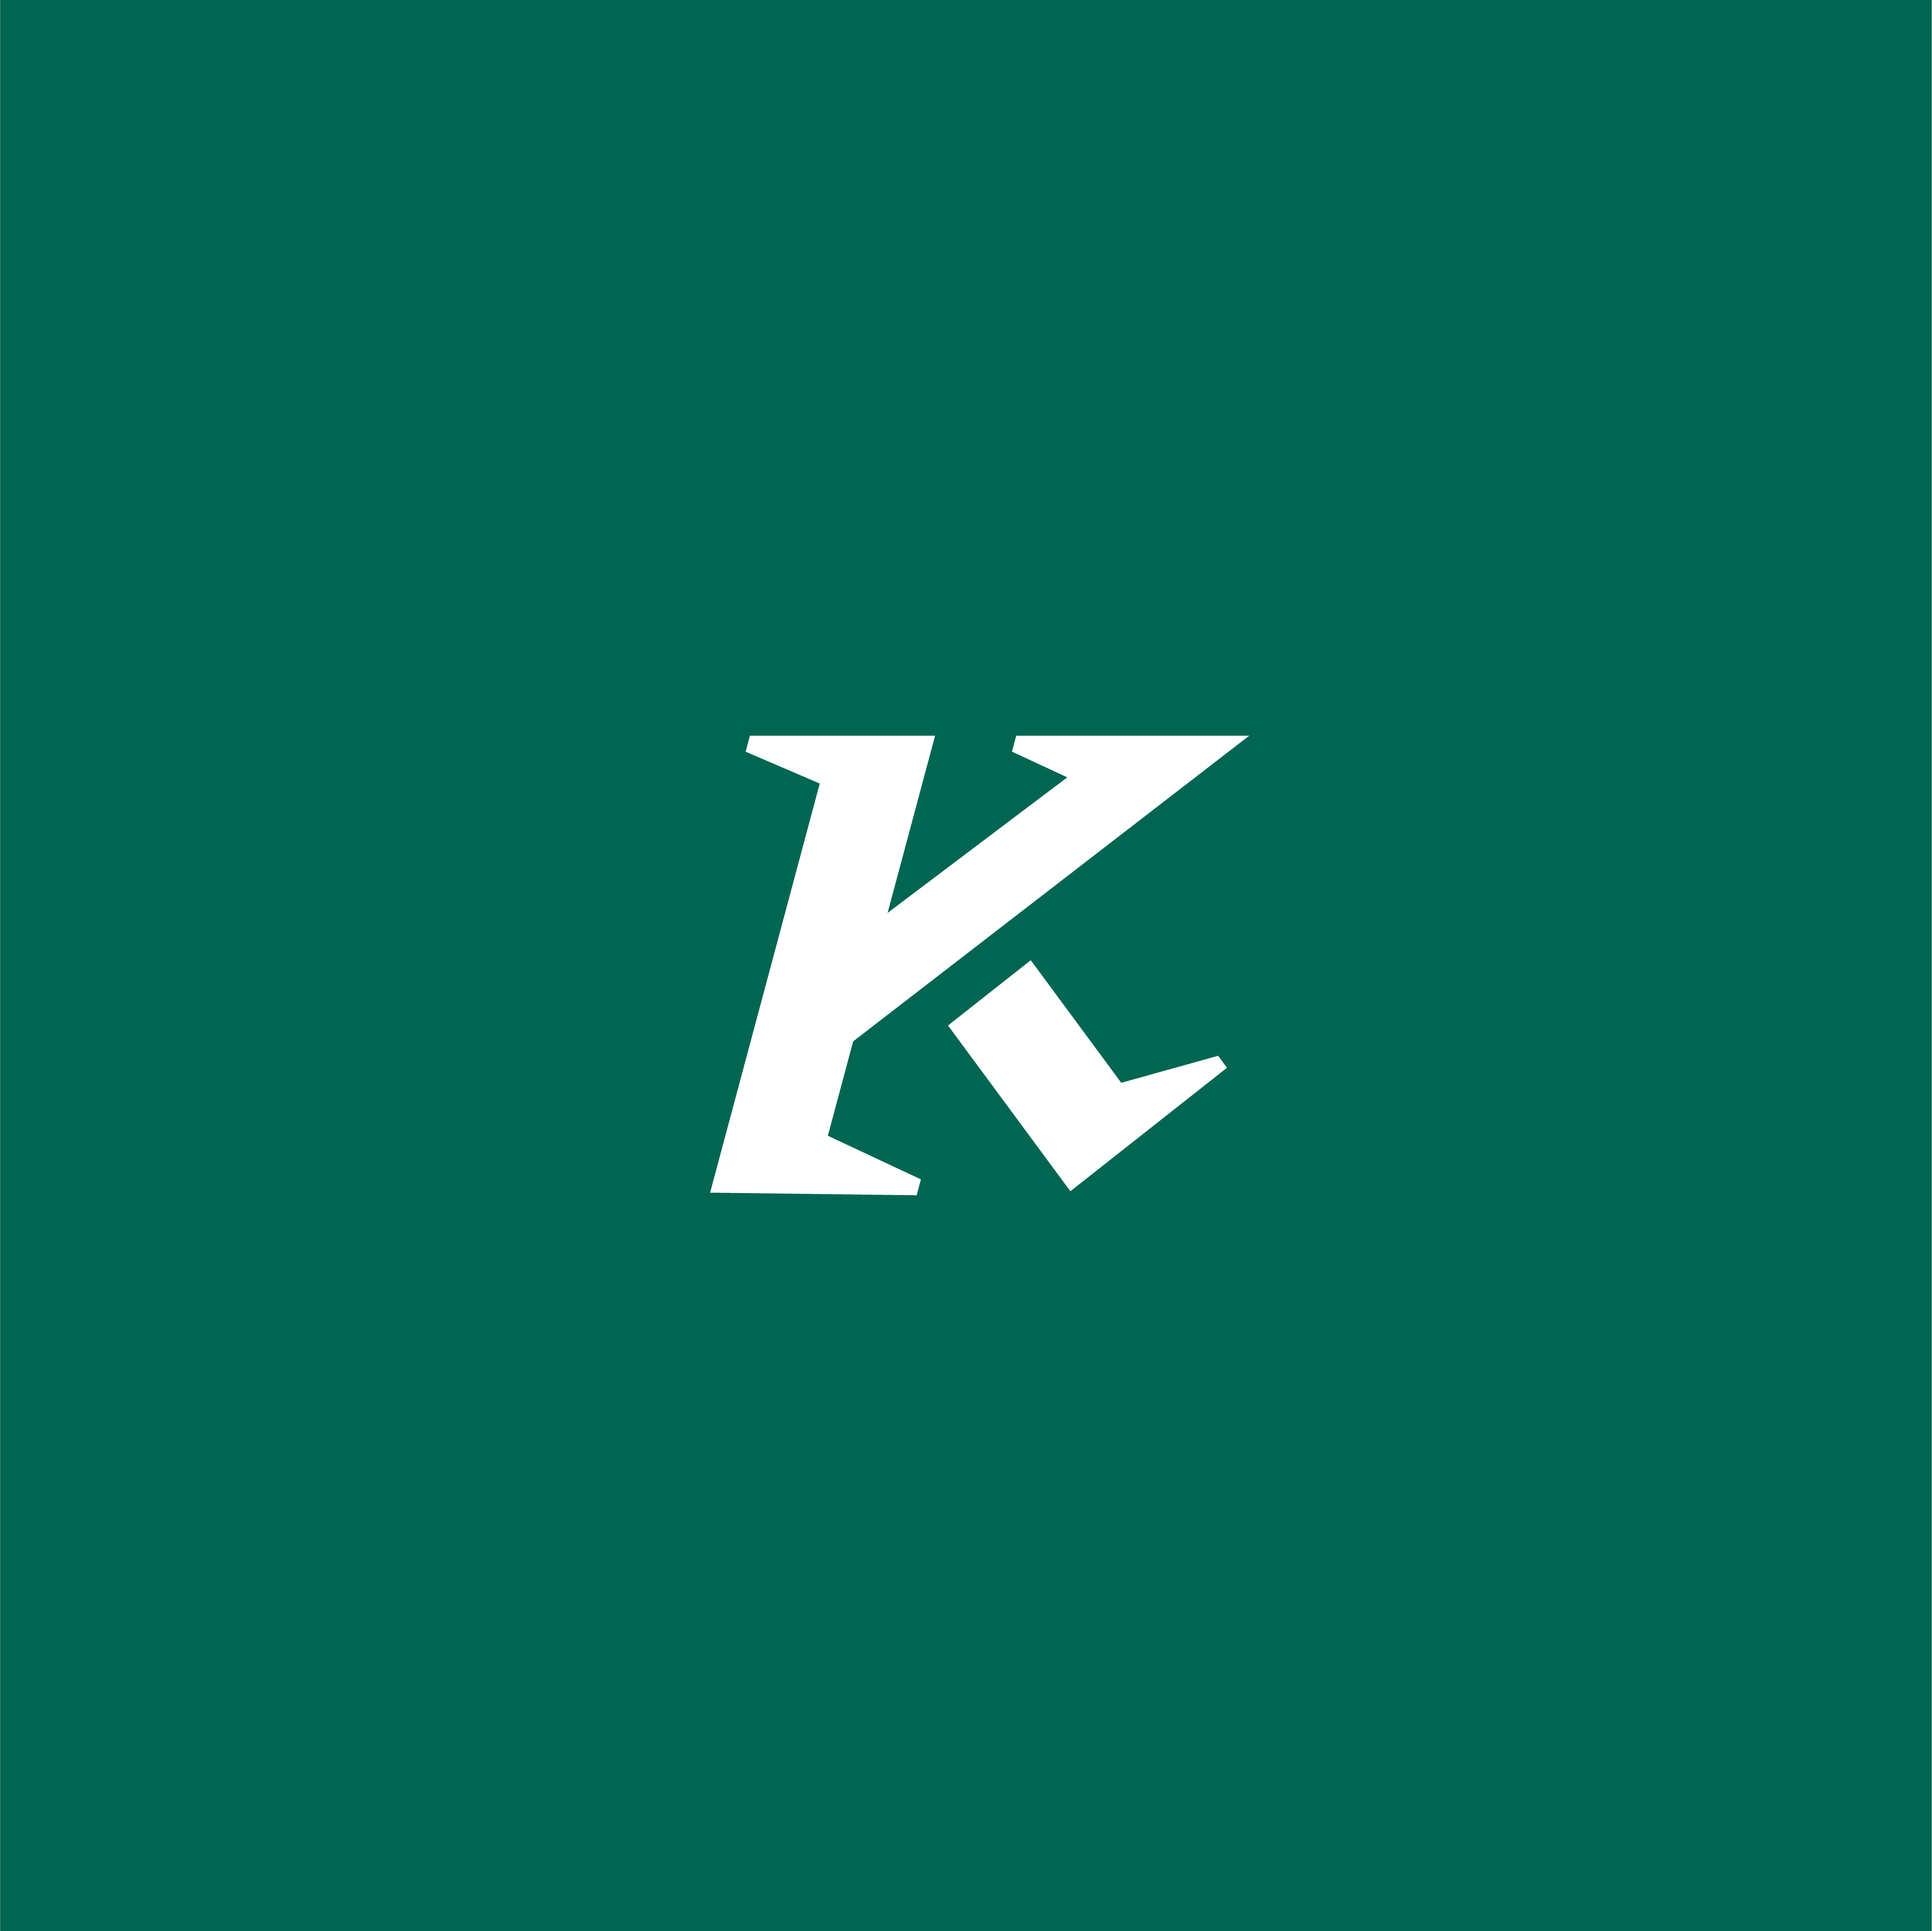 Kicks Lounge Logo logo design by logo designer Mirka Studios for your inspiration and for the worlds largest logo competition